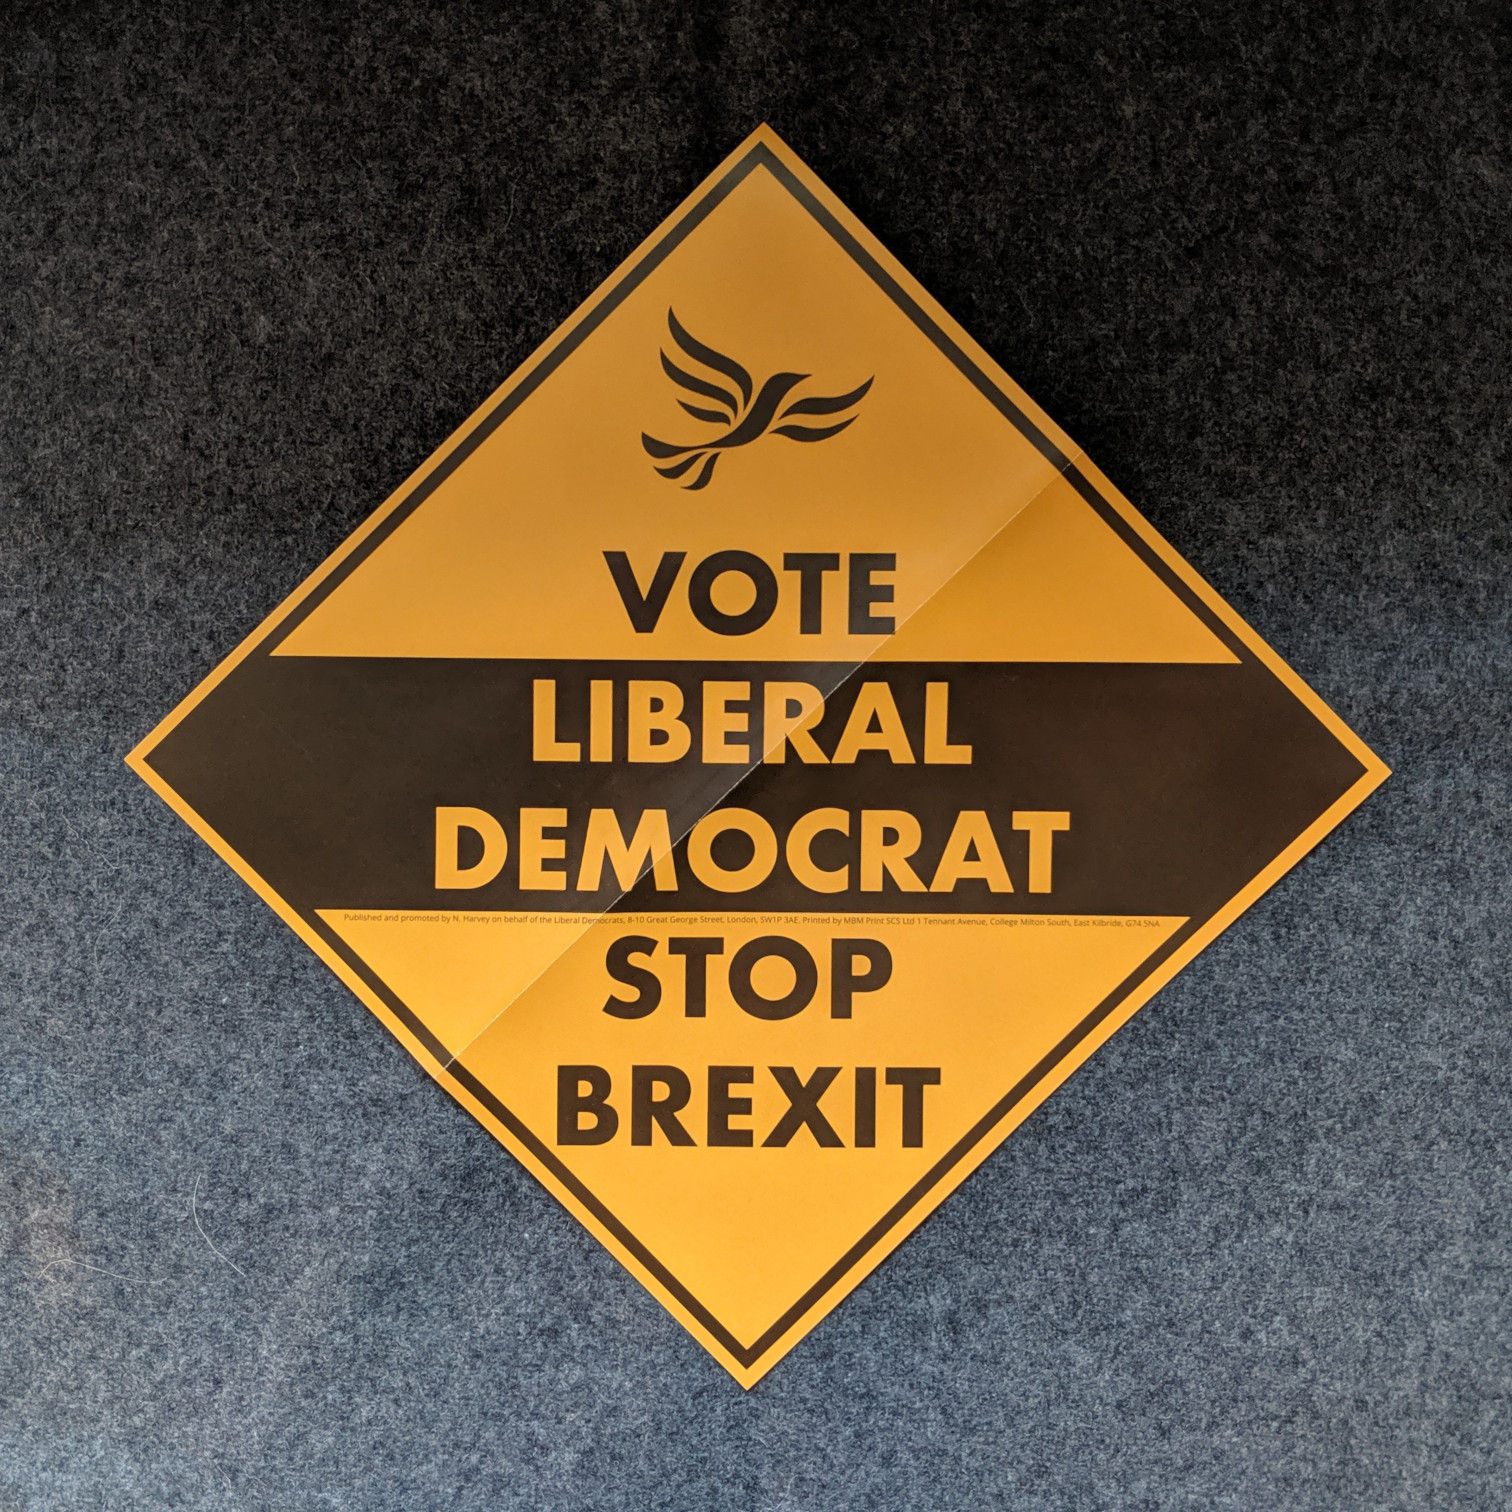 Poster: "Vote Liberal Democrat — Stop Brexit"